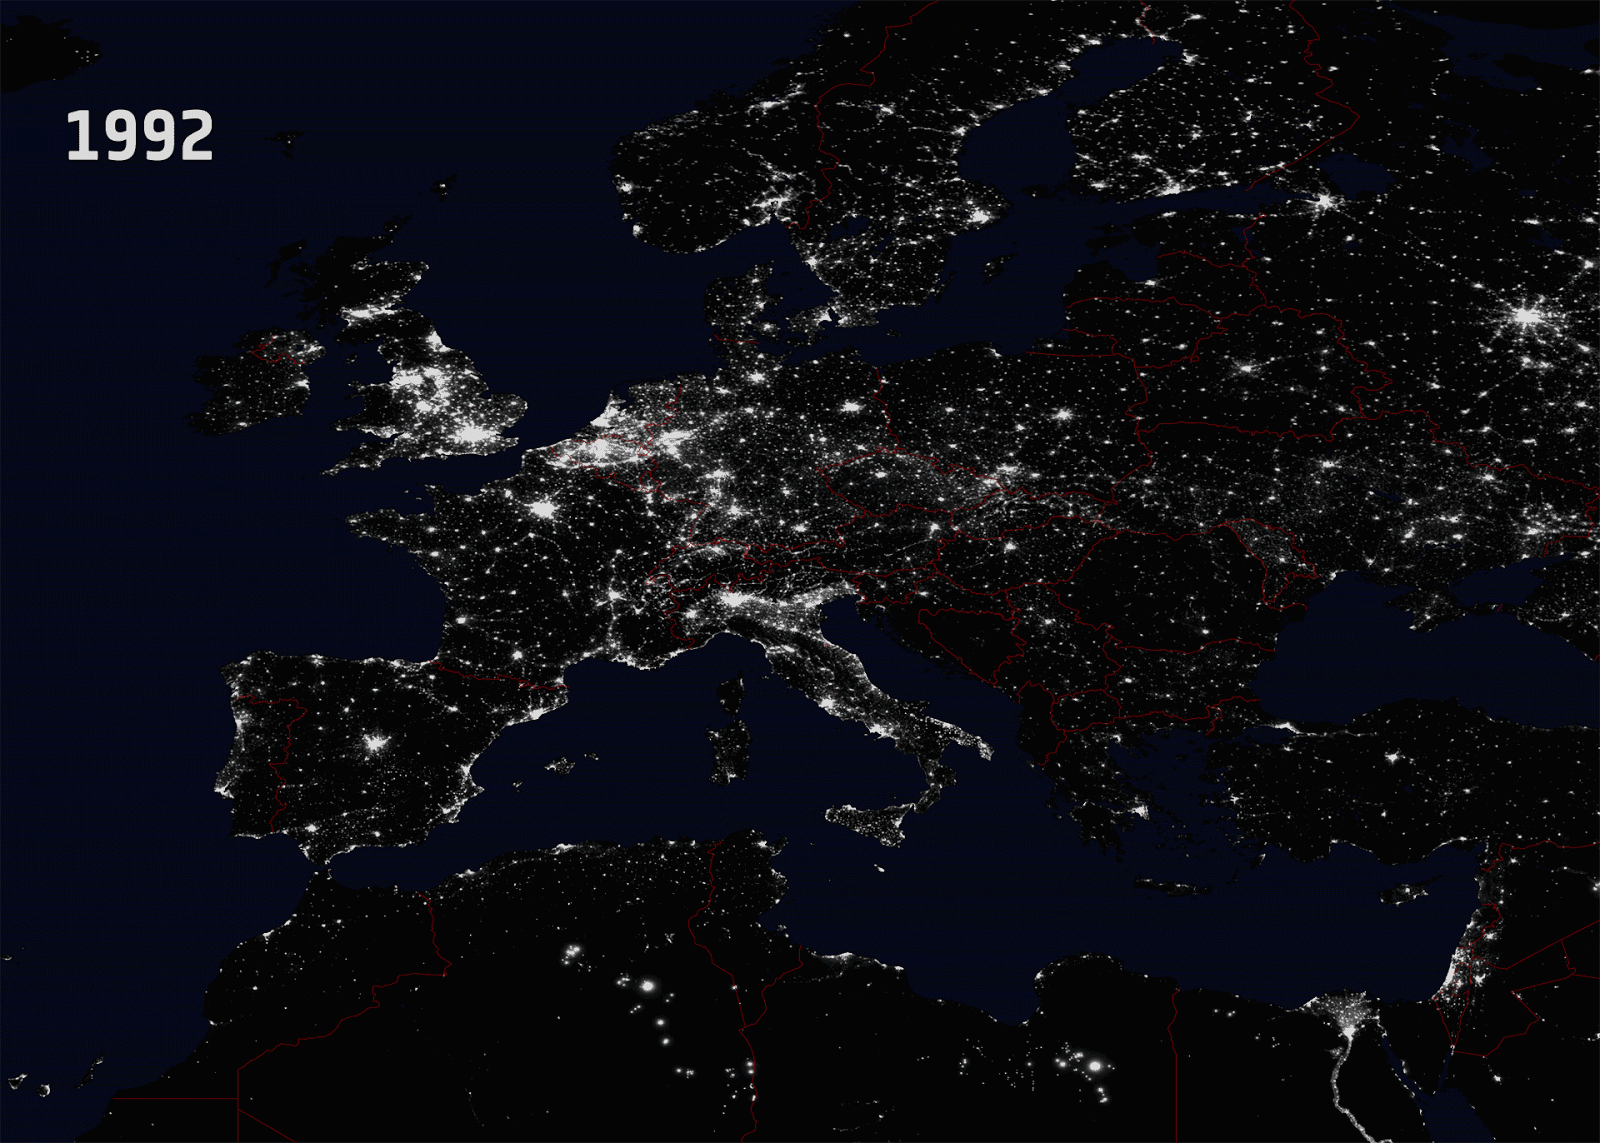 Europe at night (2010 vs 1992) 